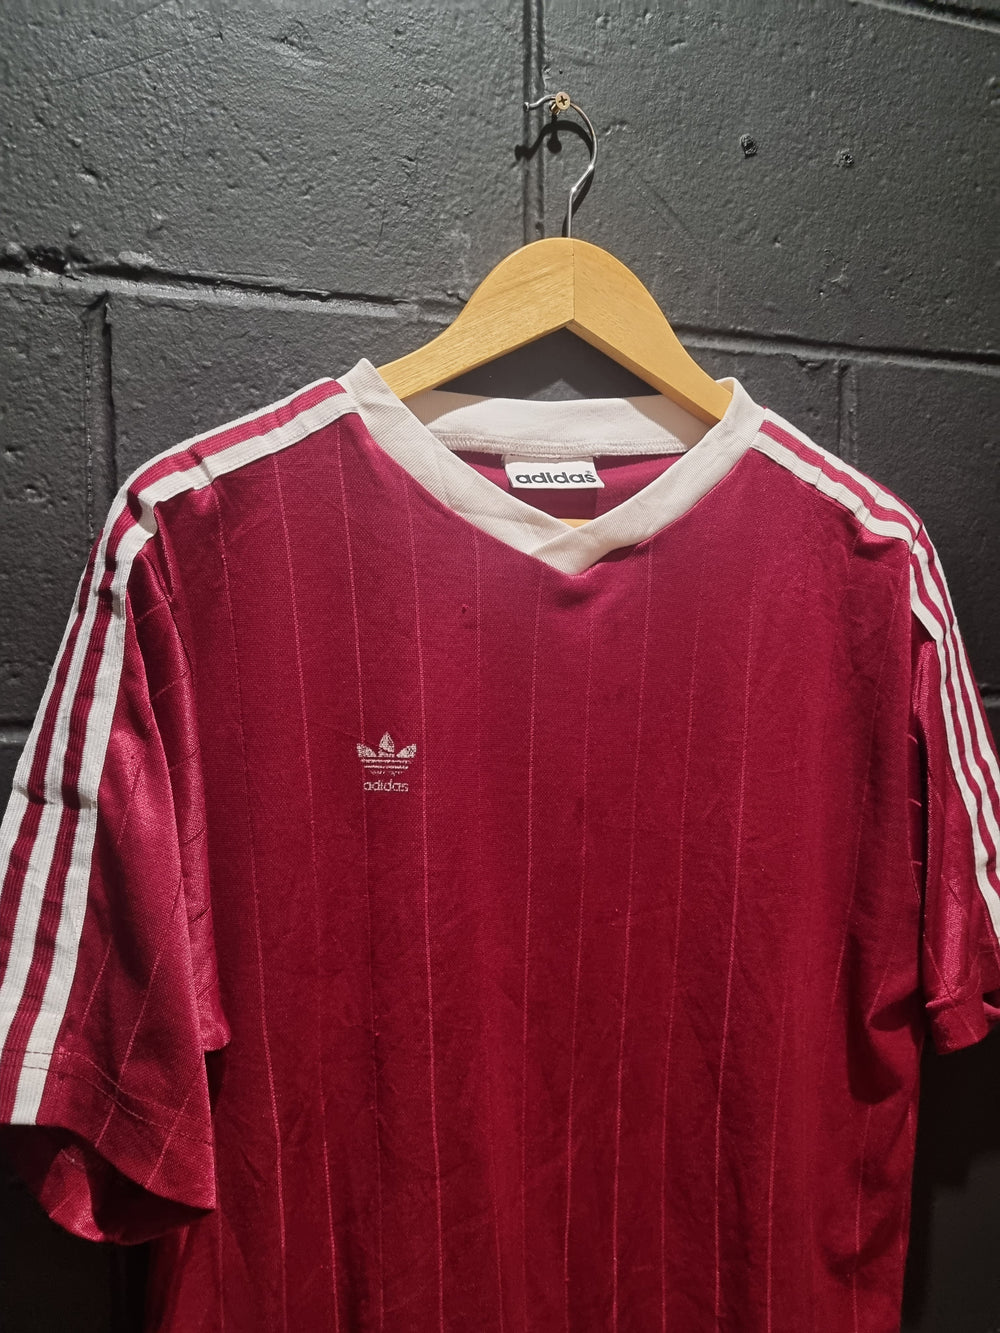 Adidas Vintage Red Football Jersey Medium